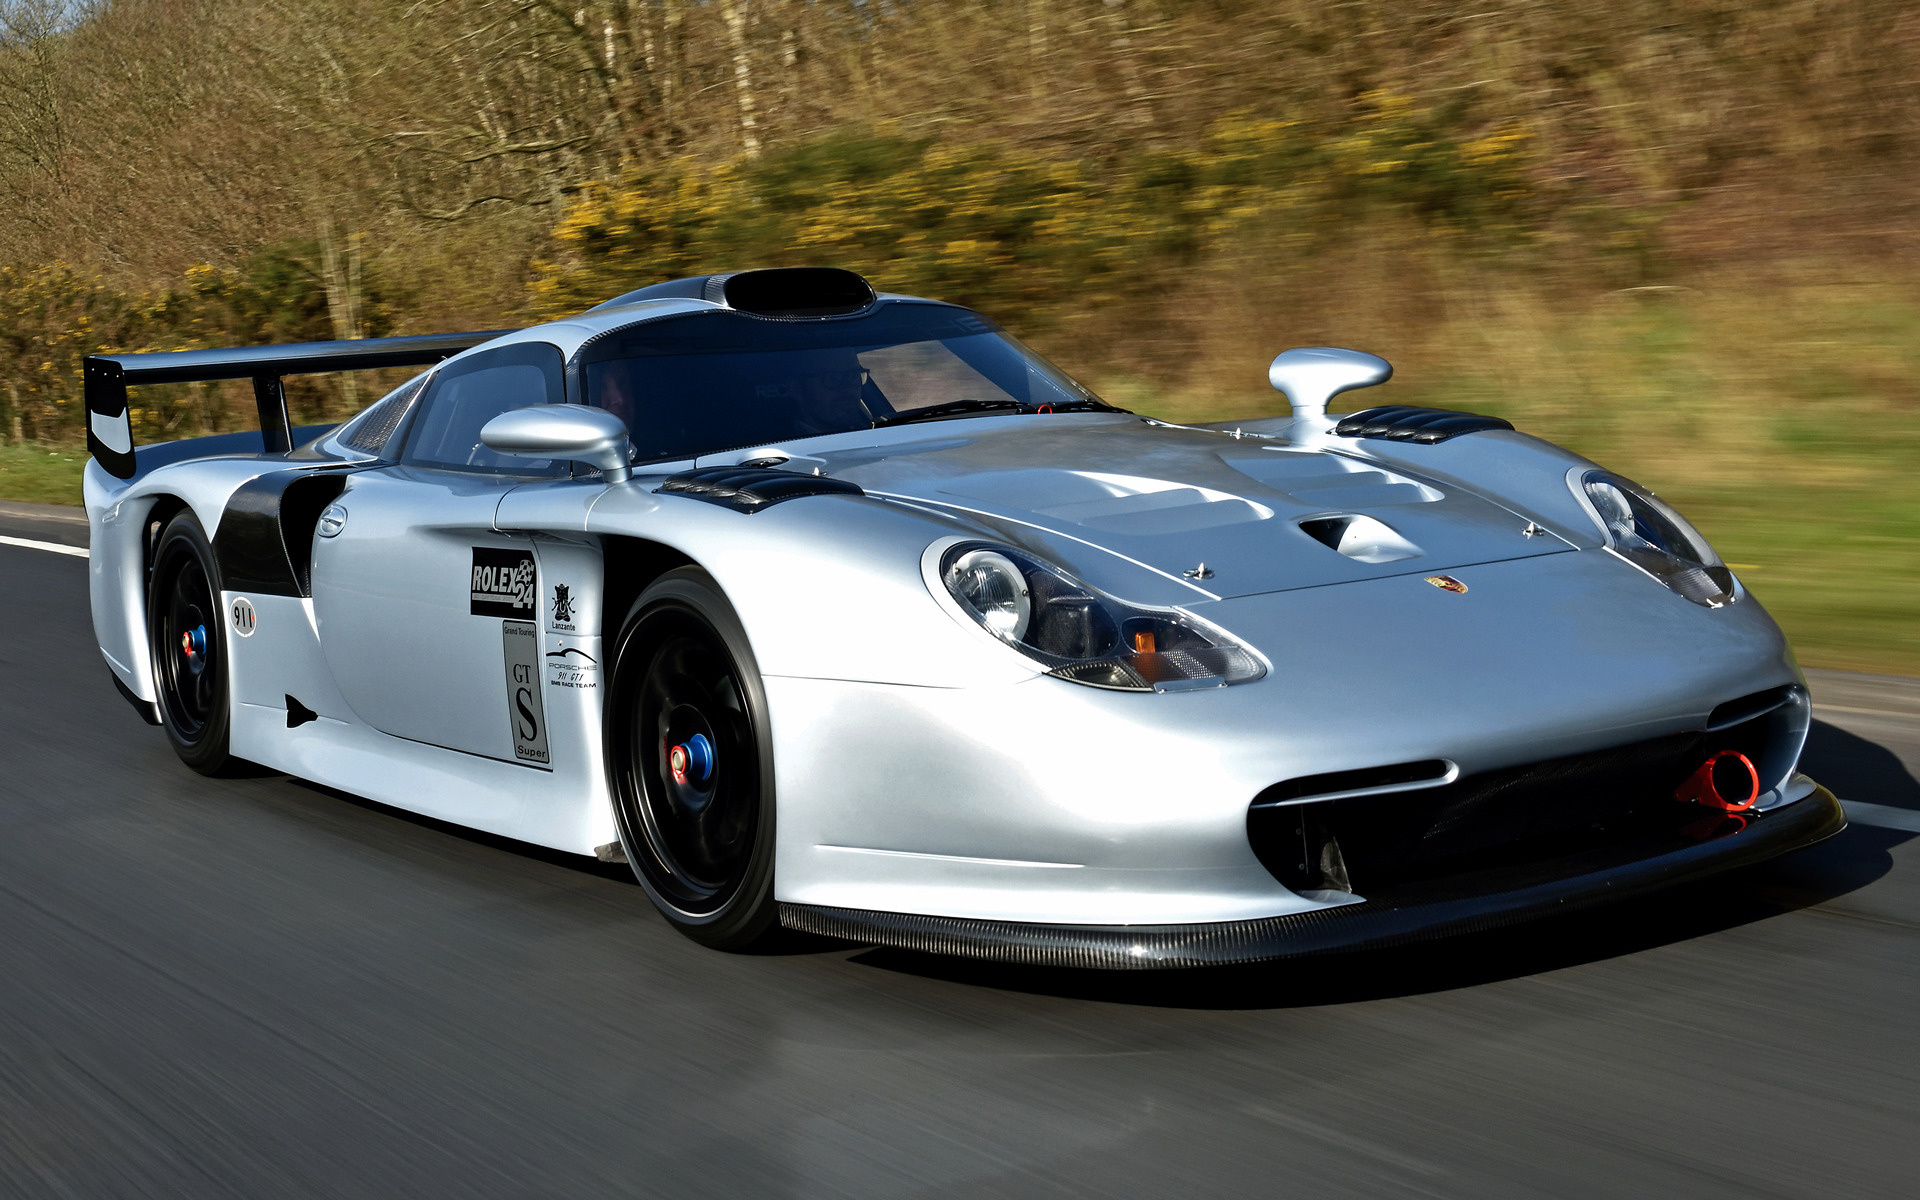 Porsche 911 GT1 Evolution and HD Image